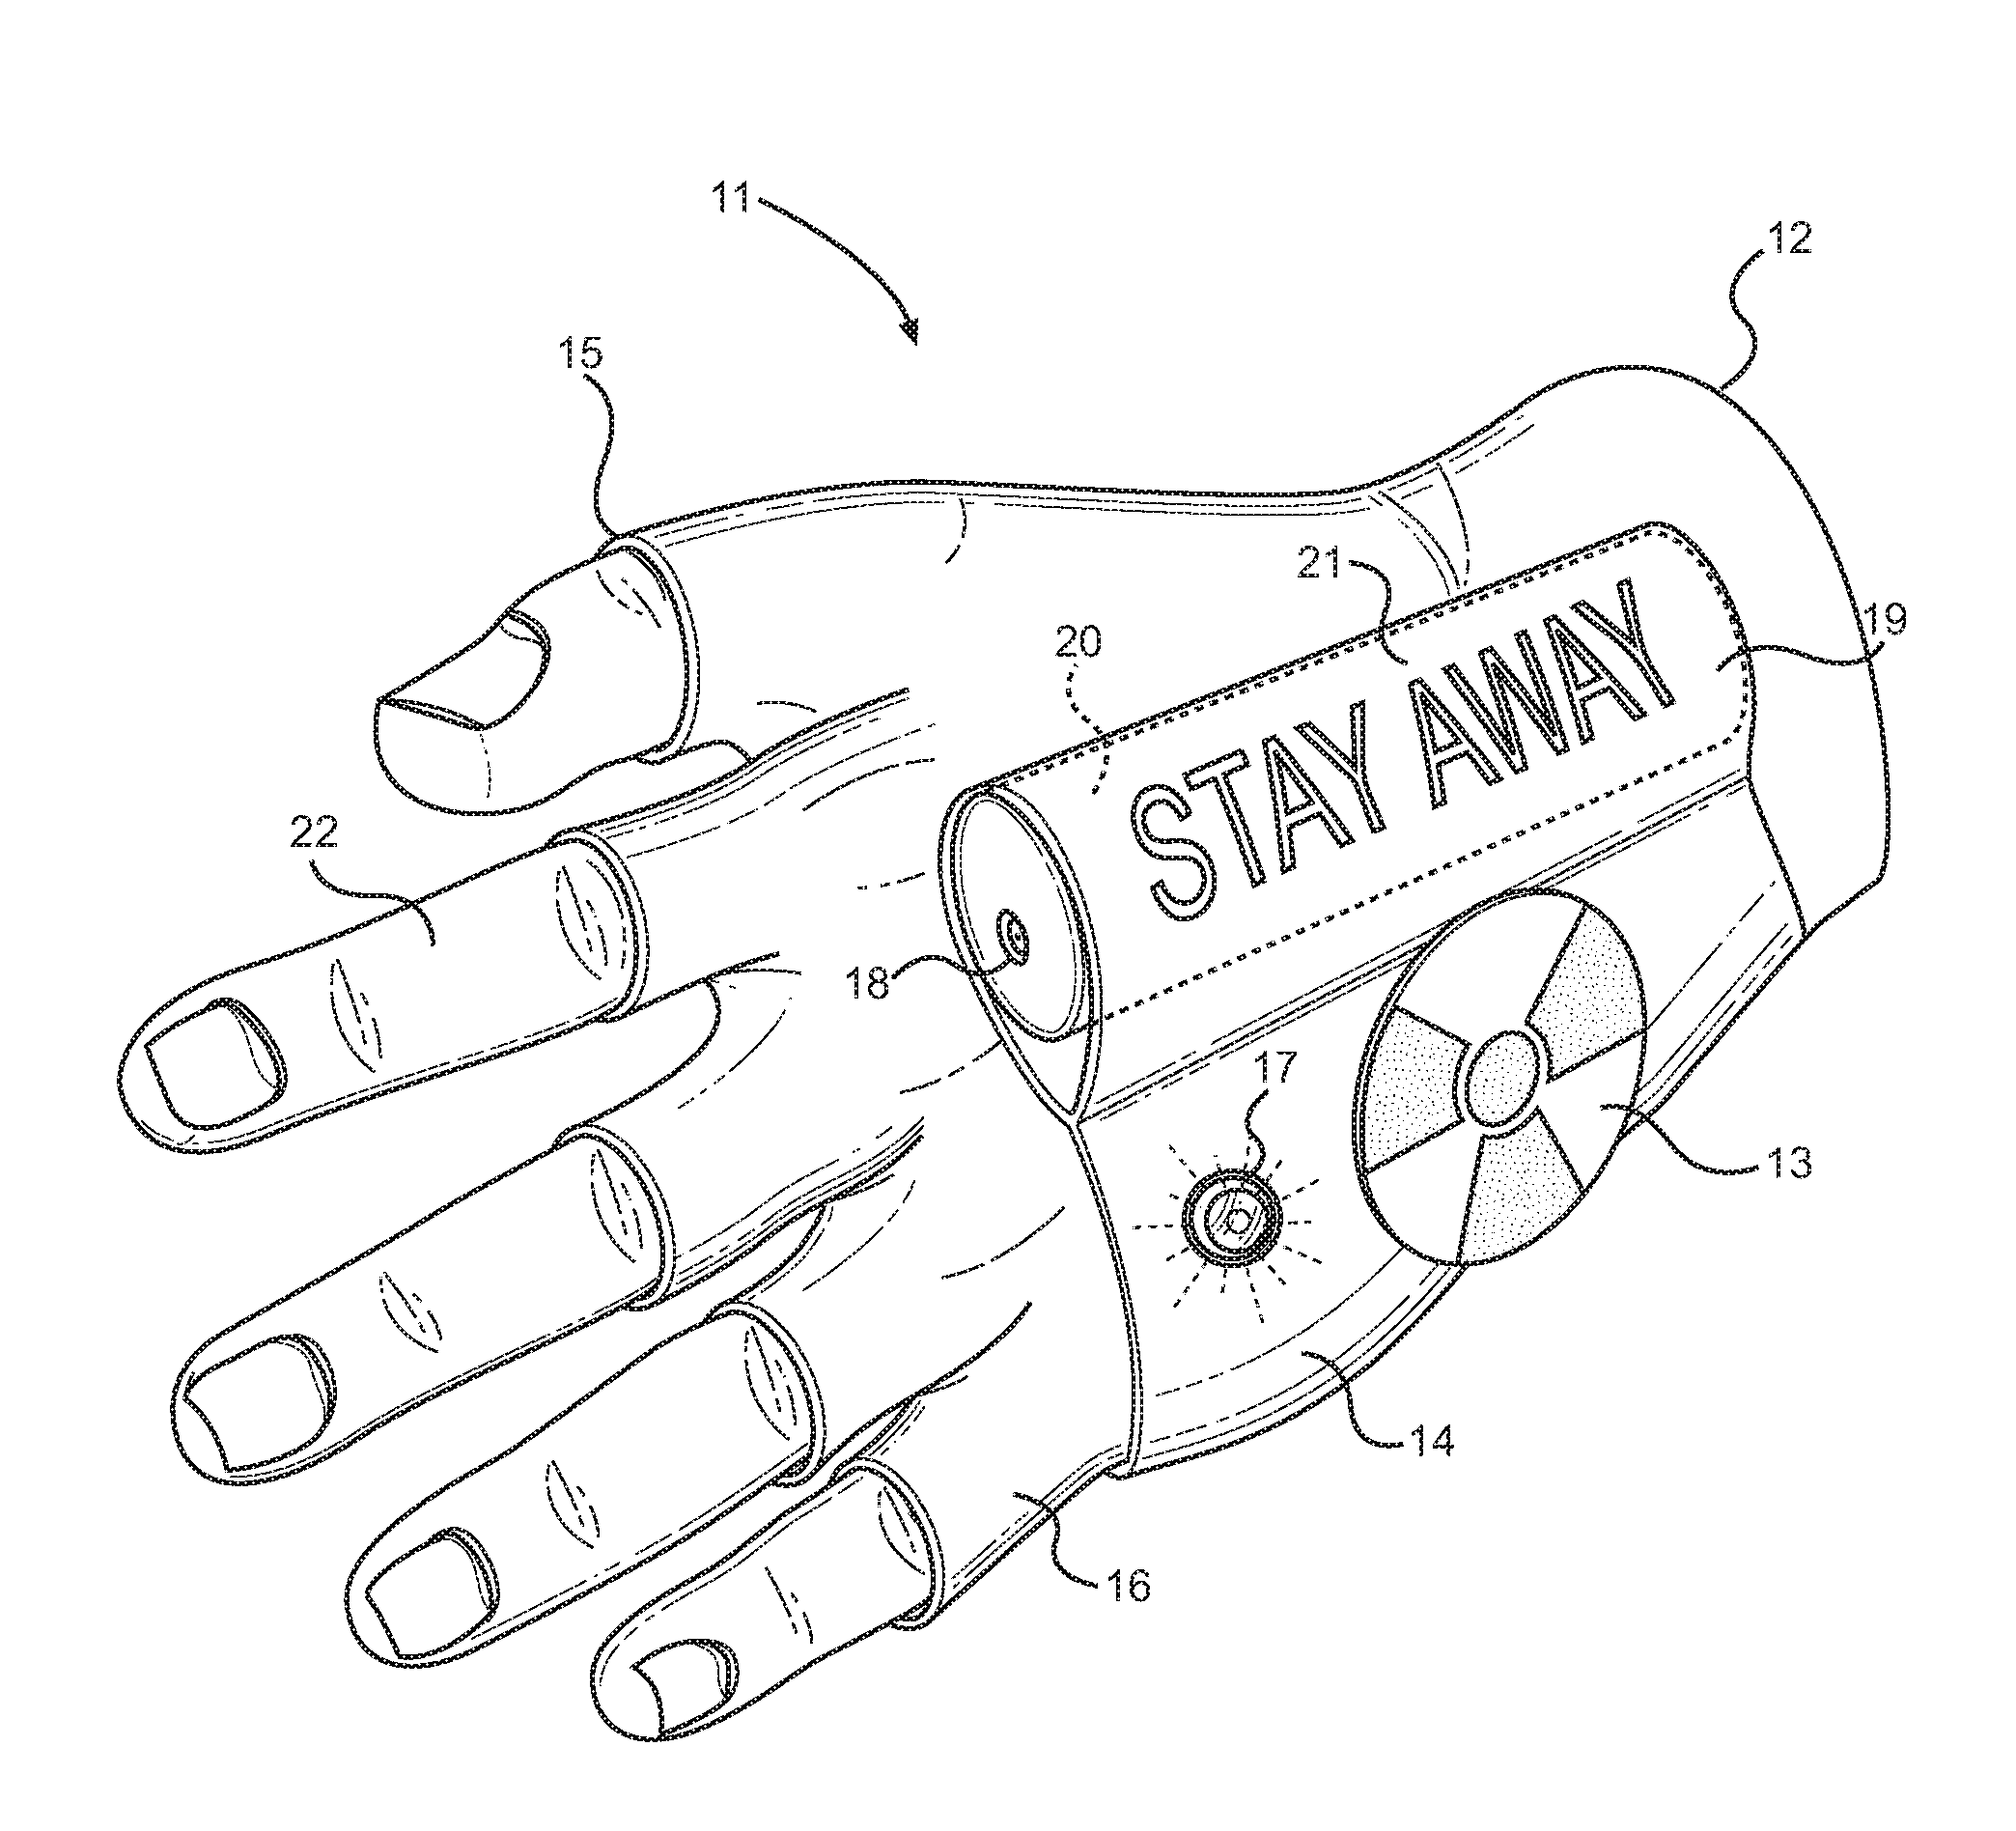 Self-Defense Glove